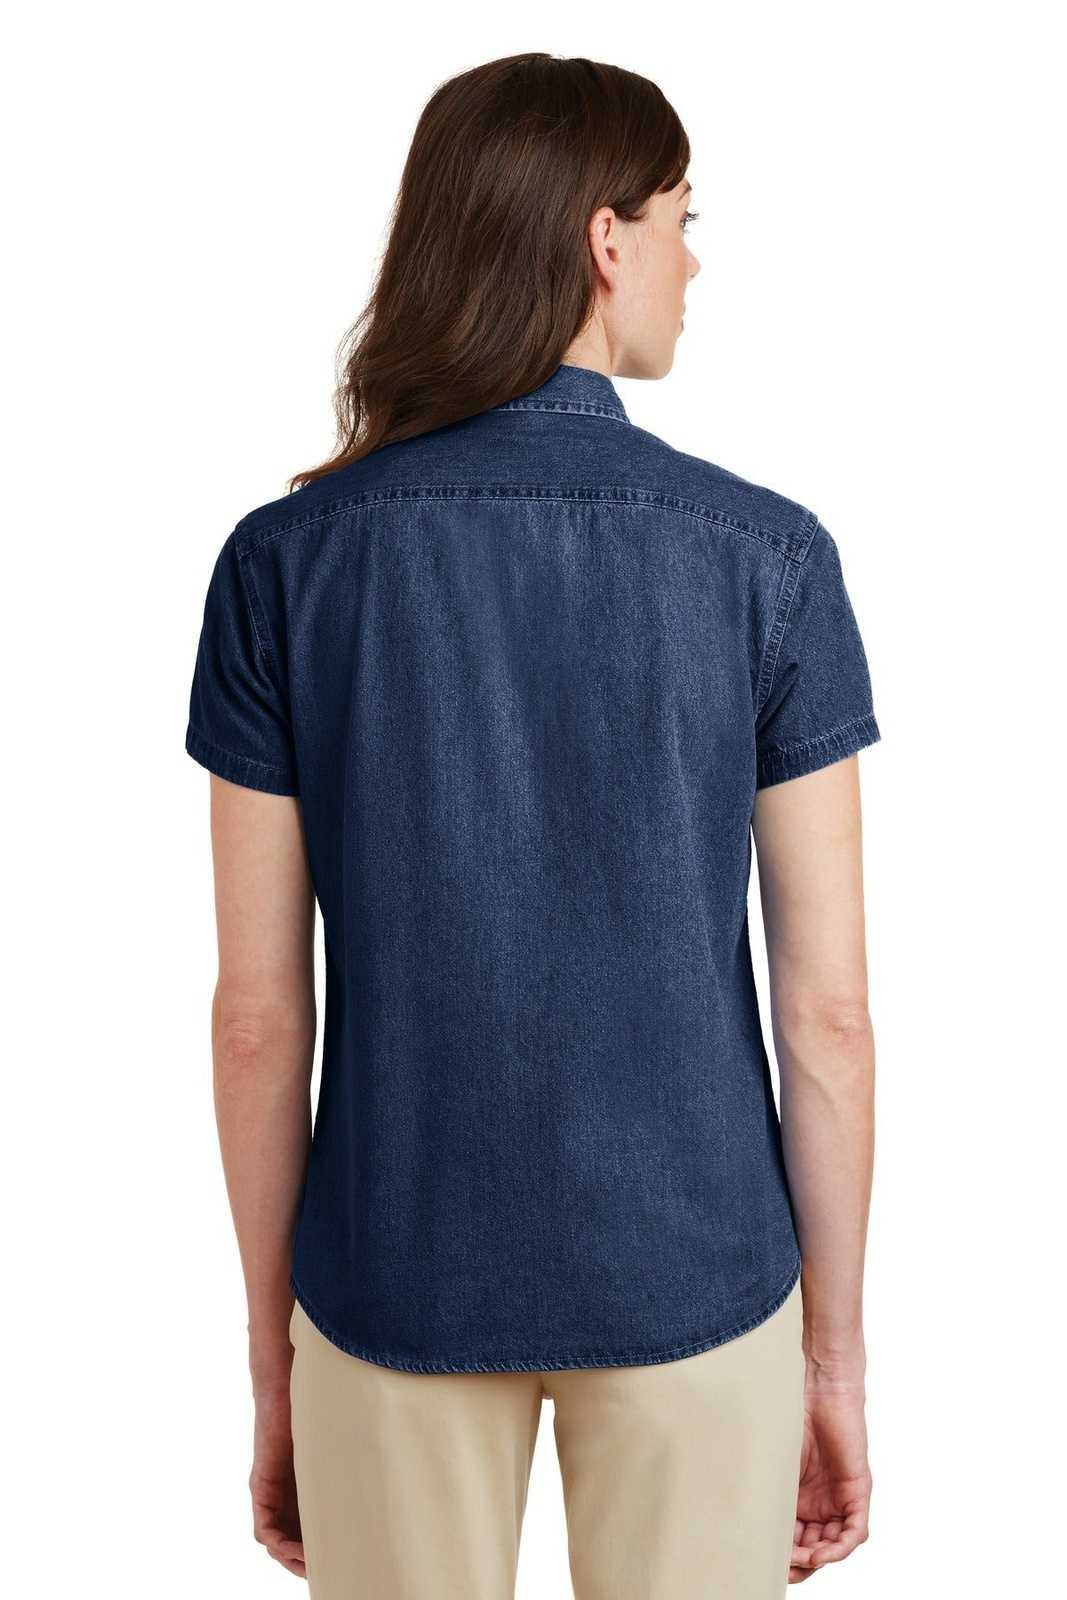 Port & Company LSP11 Ladies Short Sleeve Value Denim Shirt - Ink Blue - HIT a Double - 1